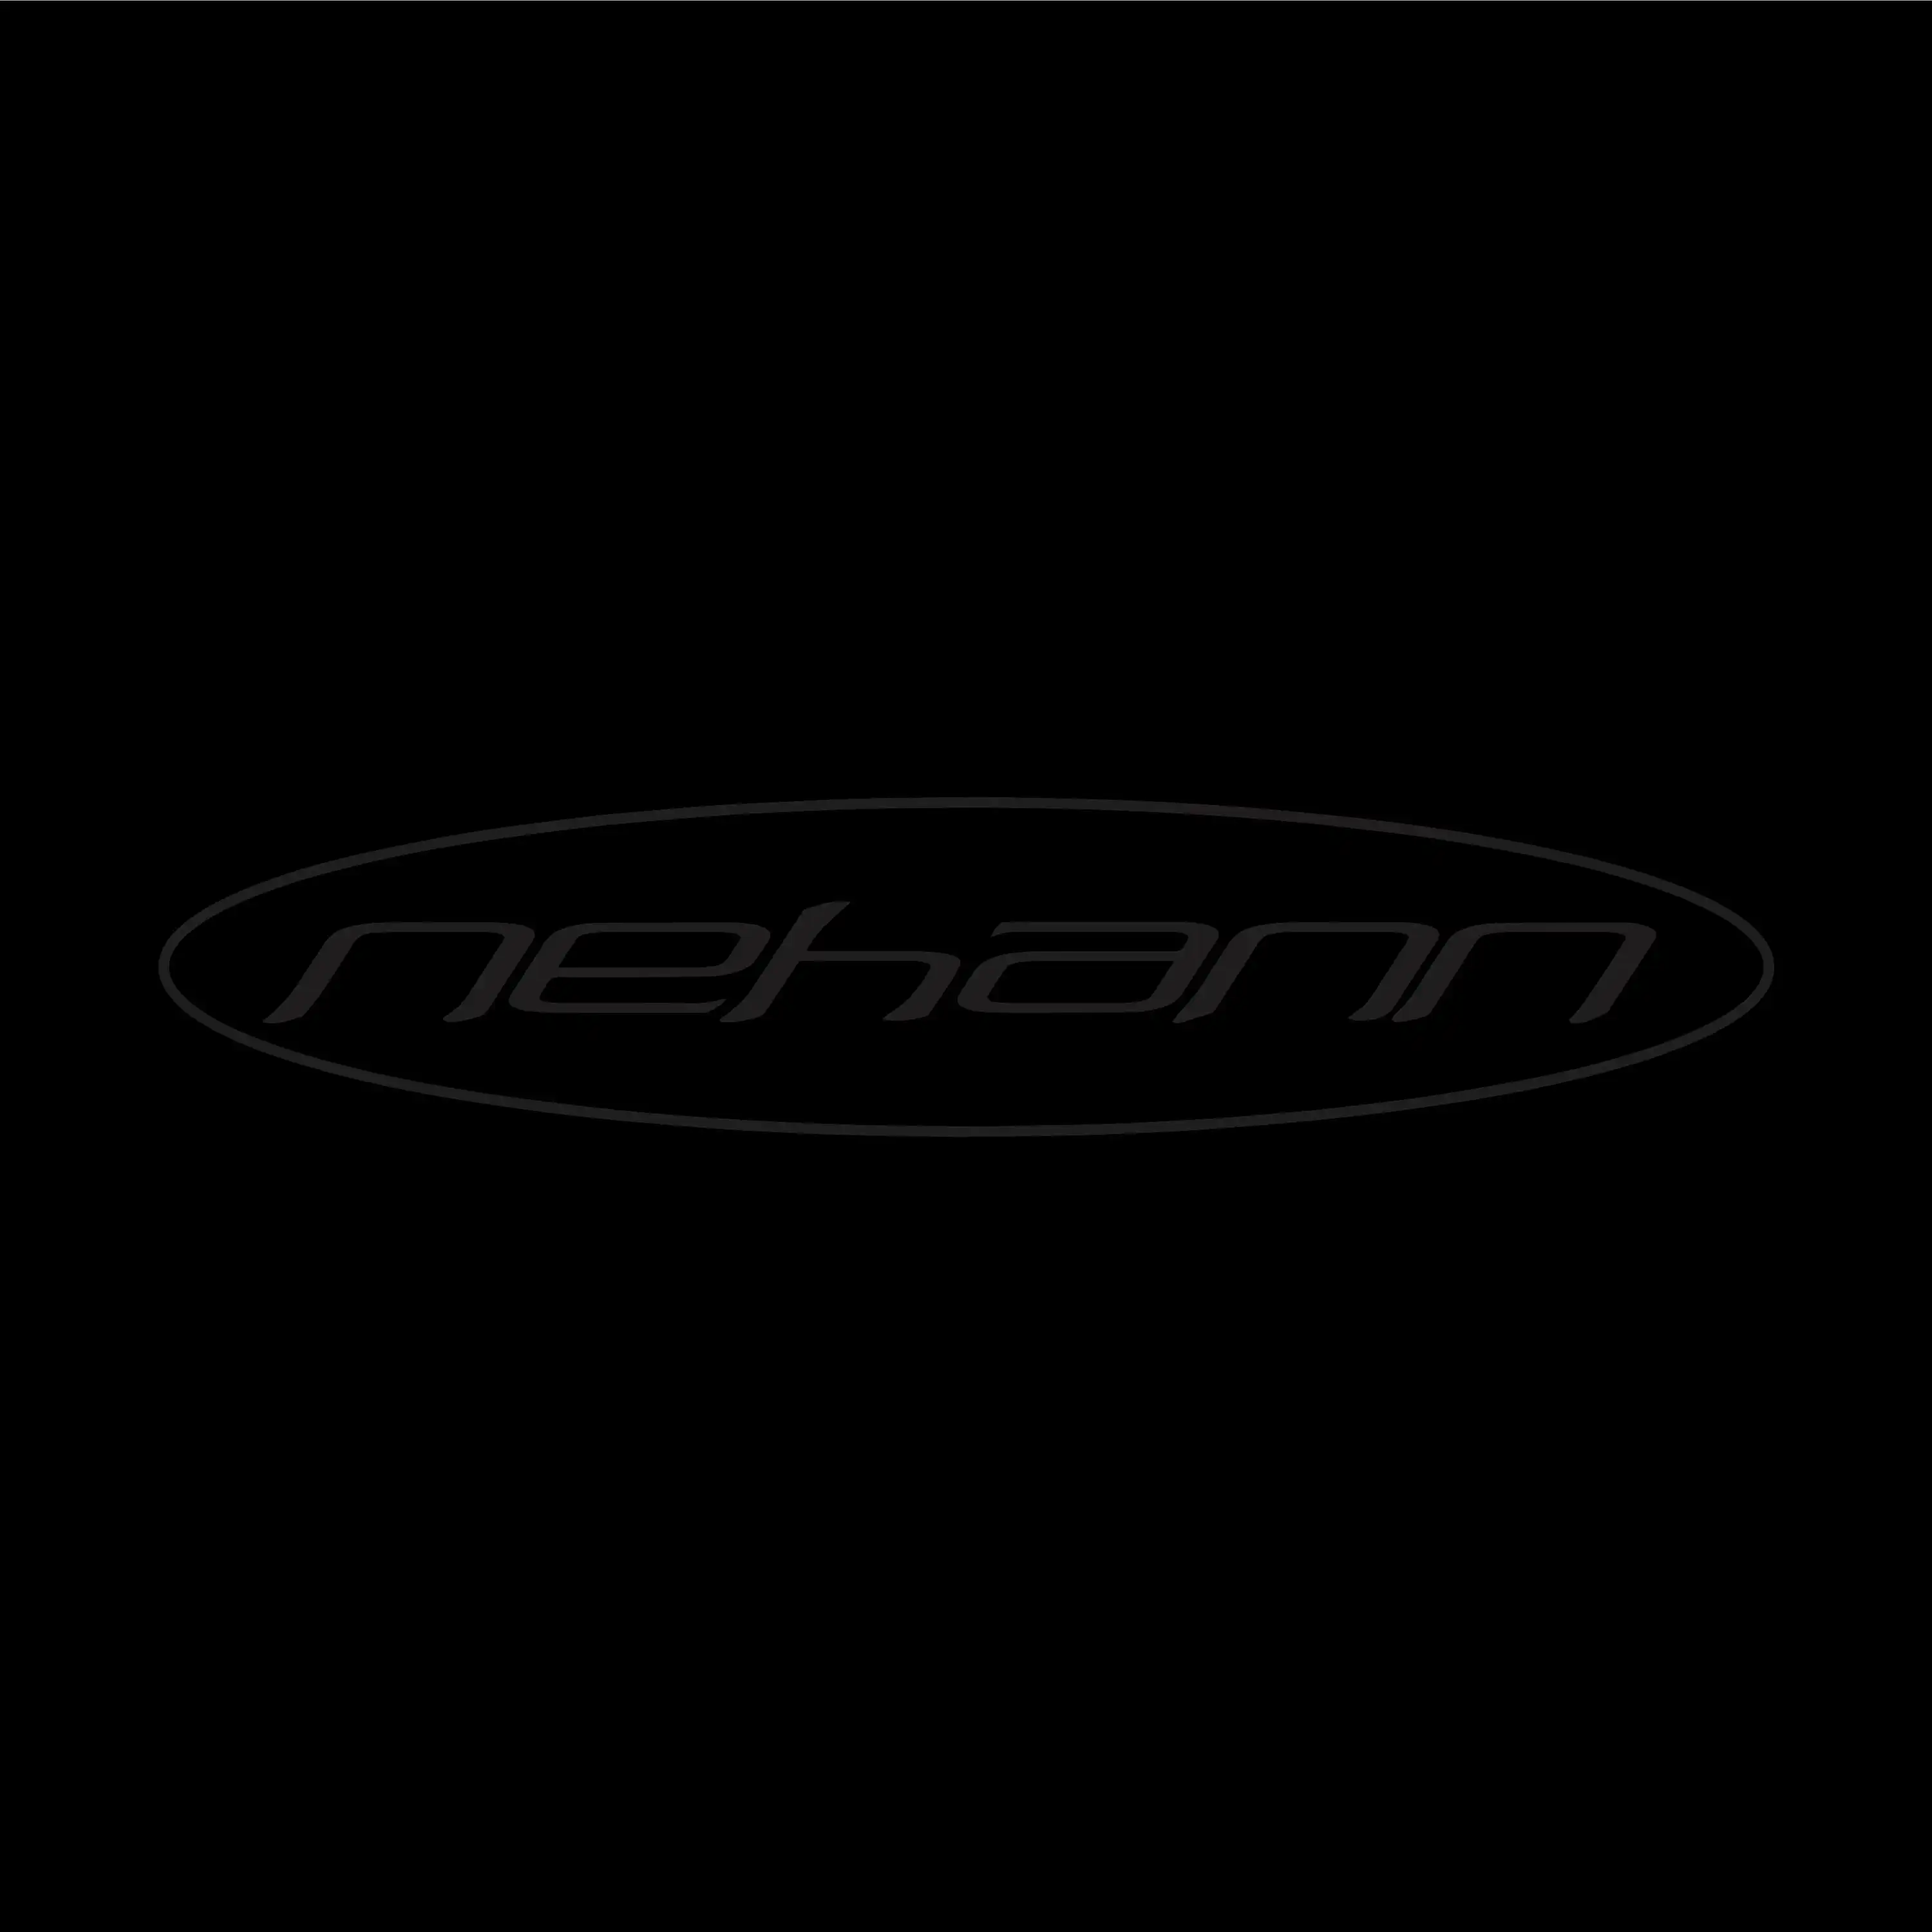 NEHANN / NEW METROPOLIS